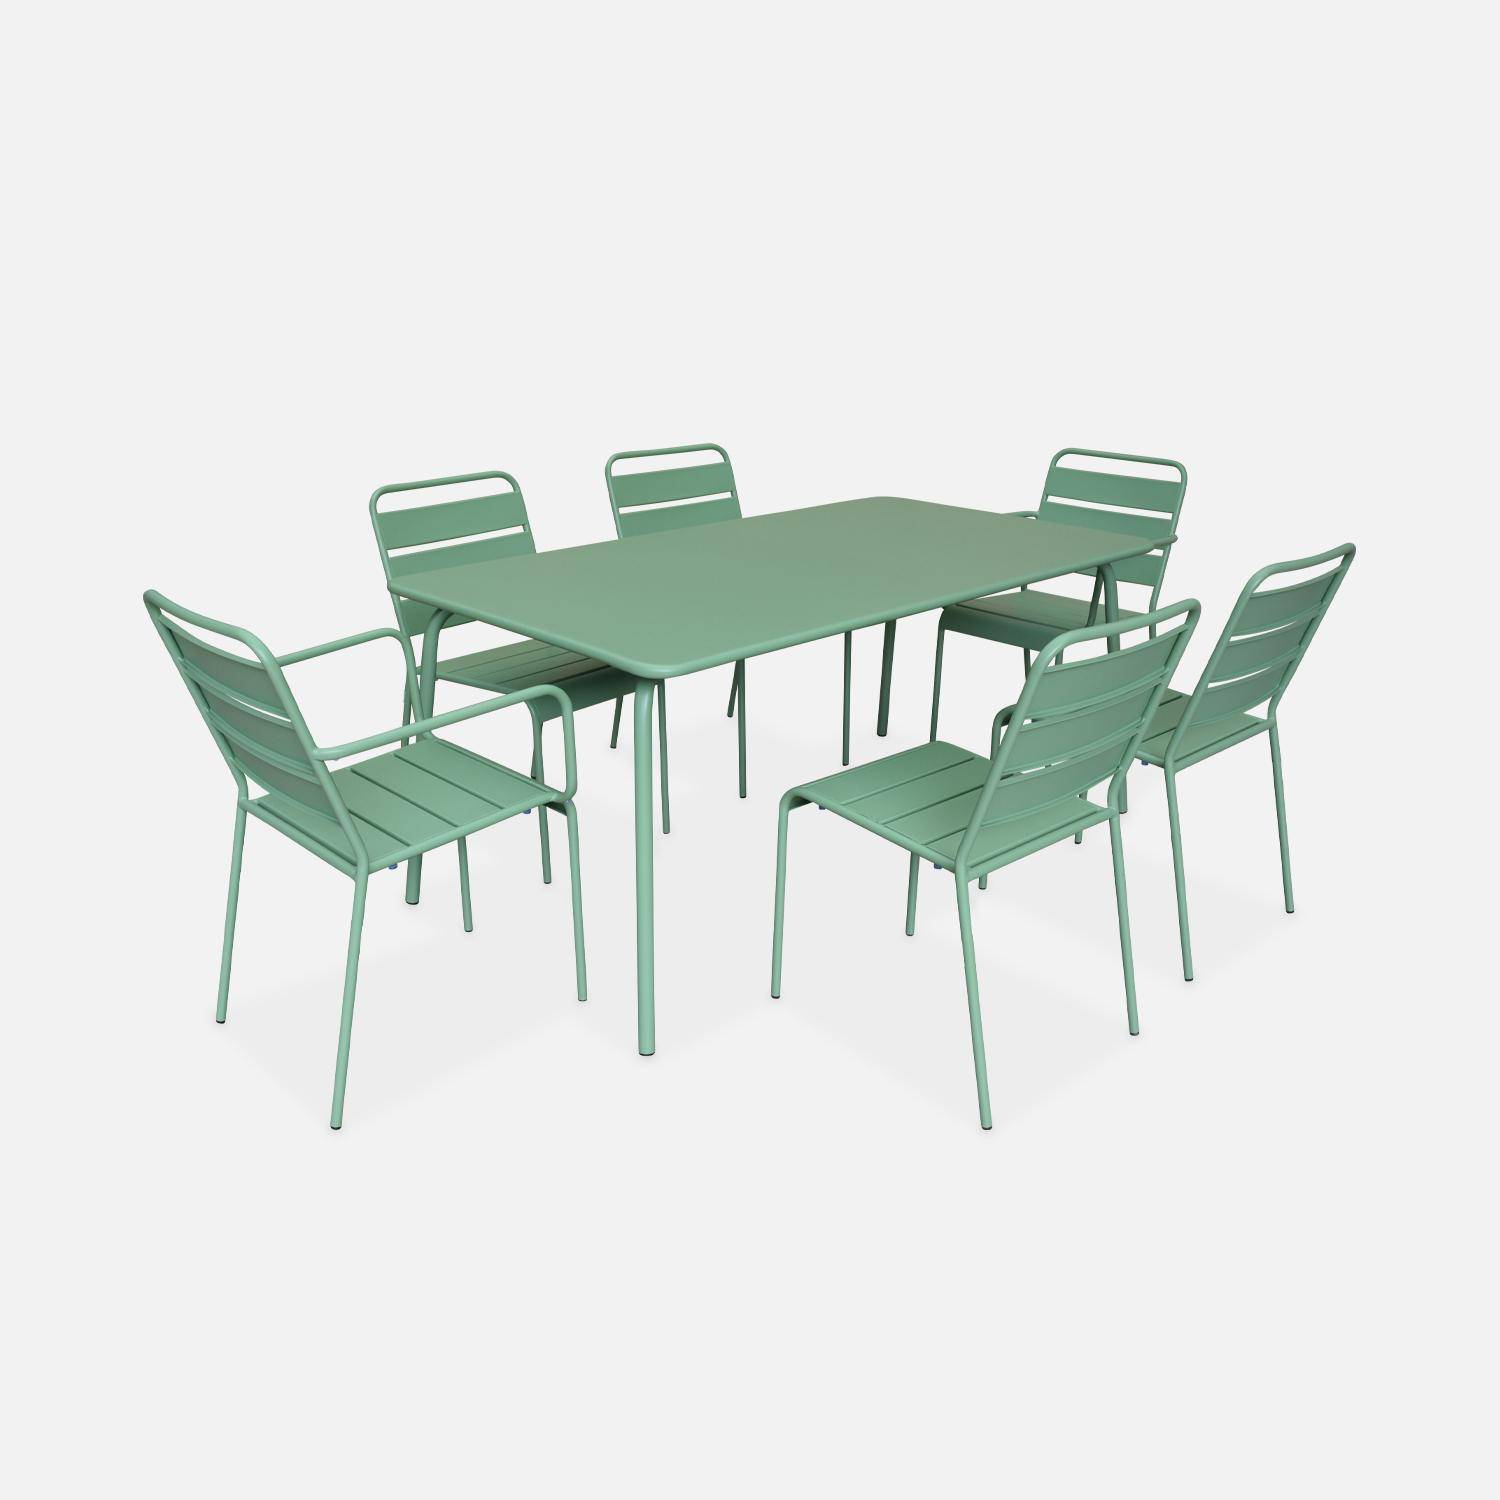 Table de jardin en métal 160x90cm + 4 chaises empilables et 2 fauteuils vert jade,sweeek,Photo1